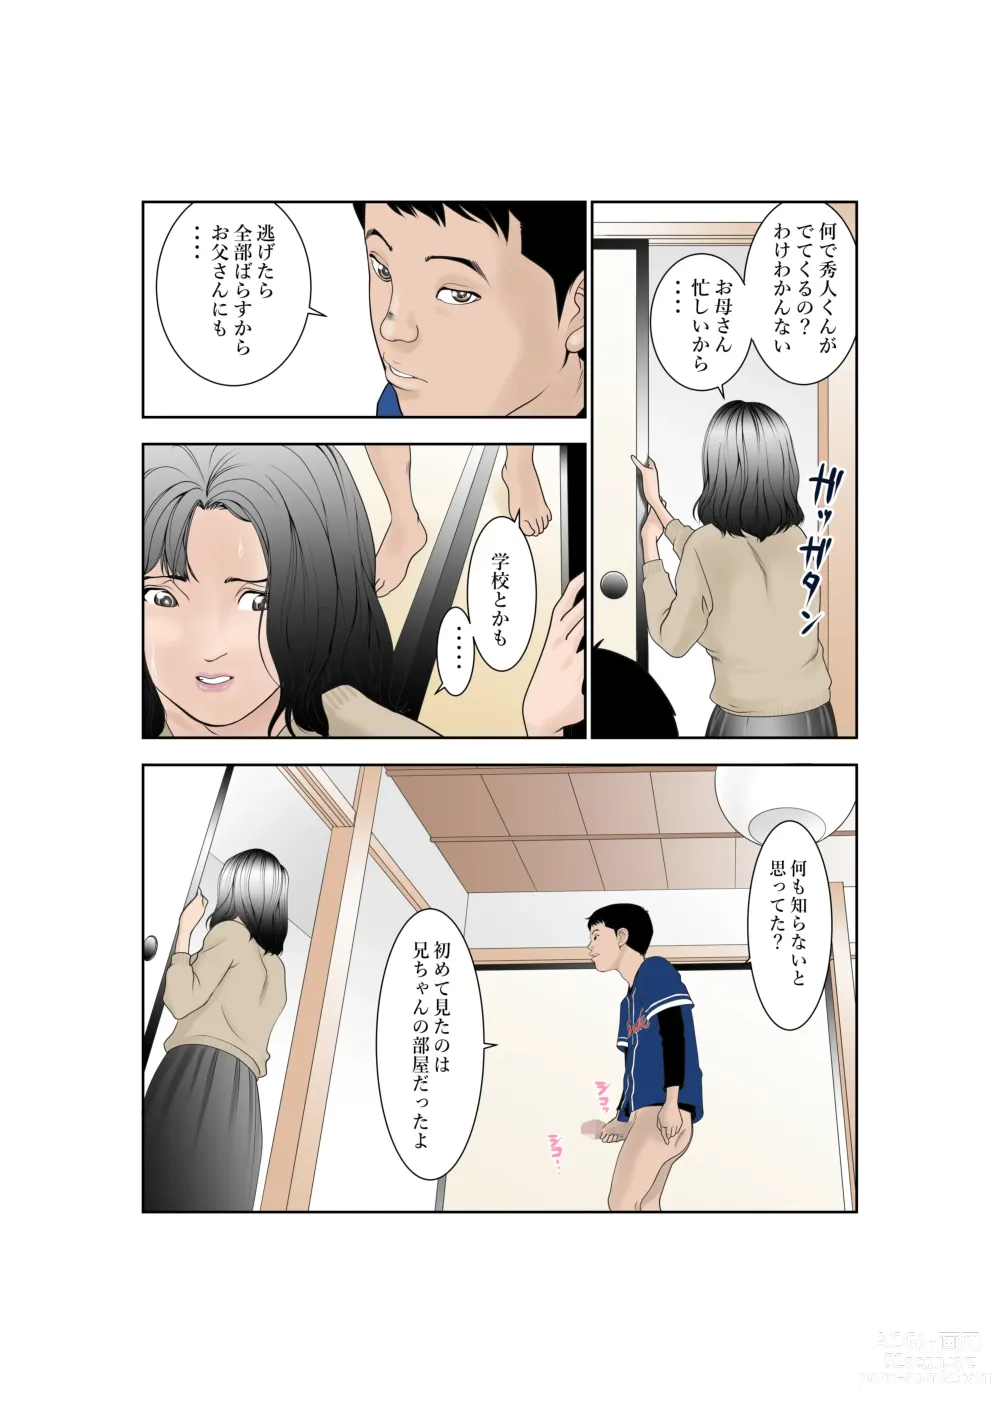 Page 14 of doujinshi Shiawase Kazoku no Sodate kata